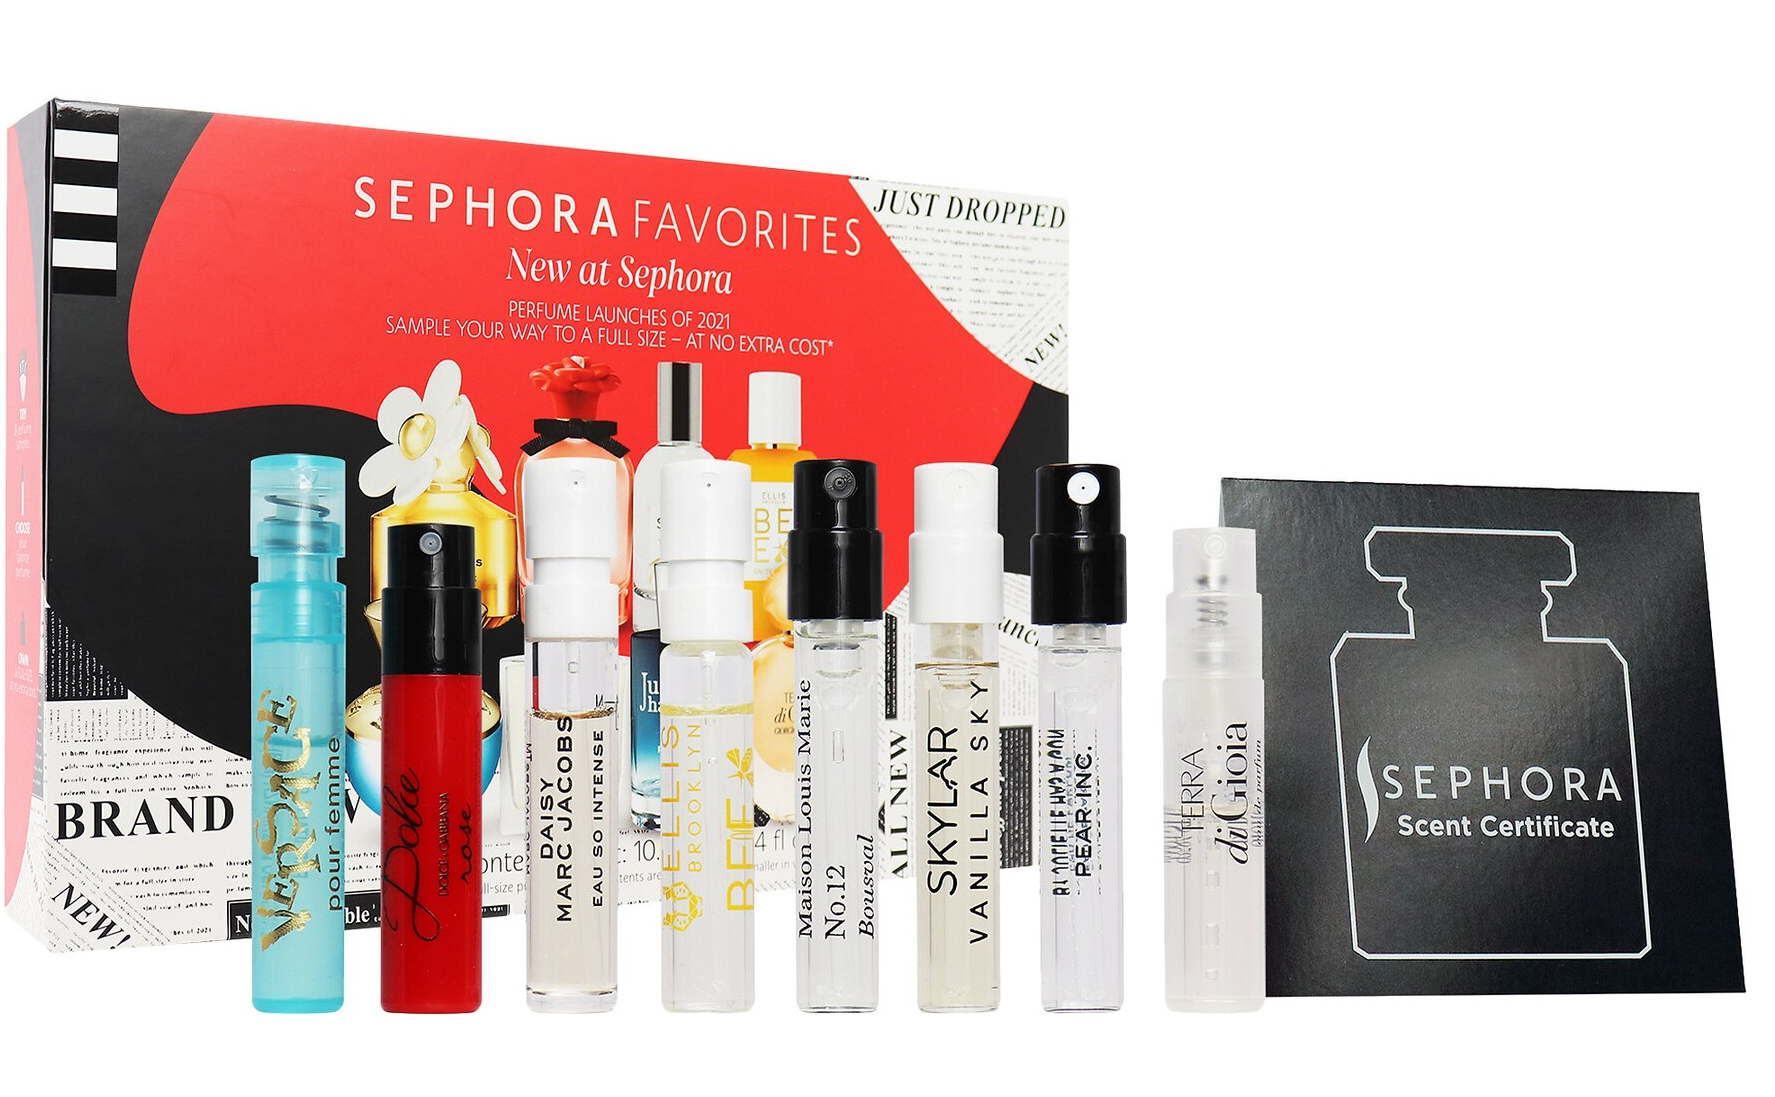 Sephora Favorites New at Sephora Perfume Sampler Set - Available Now